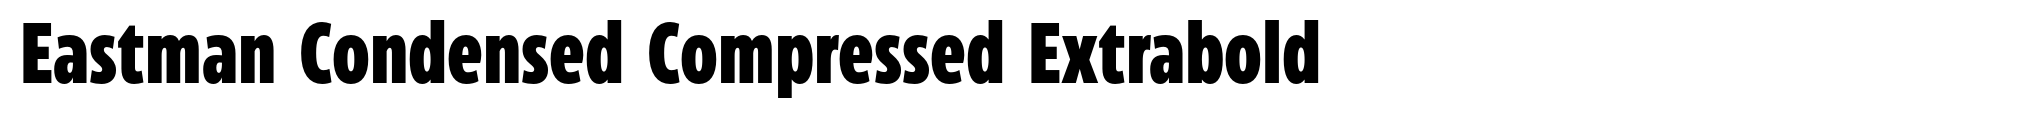 Eastman Condensed Compressed Extrabold image